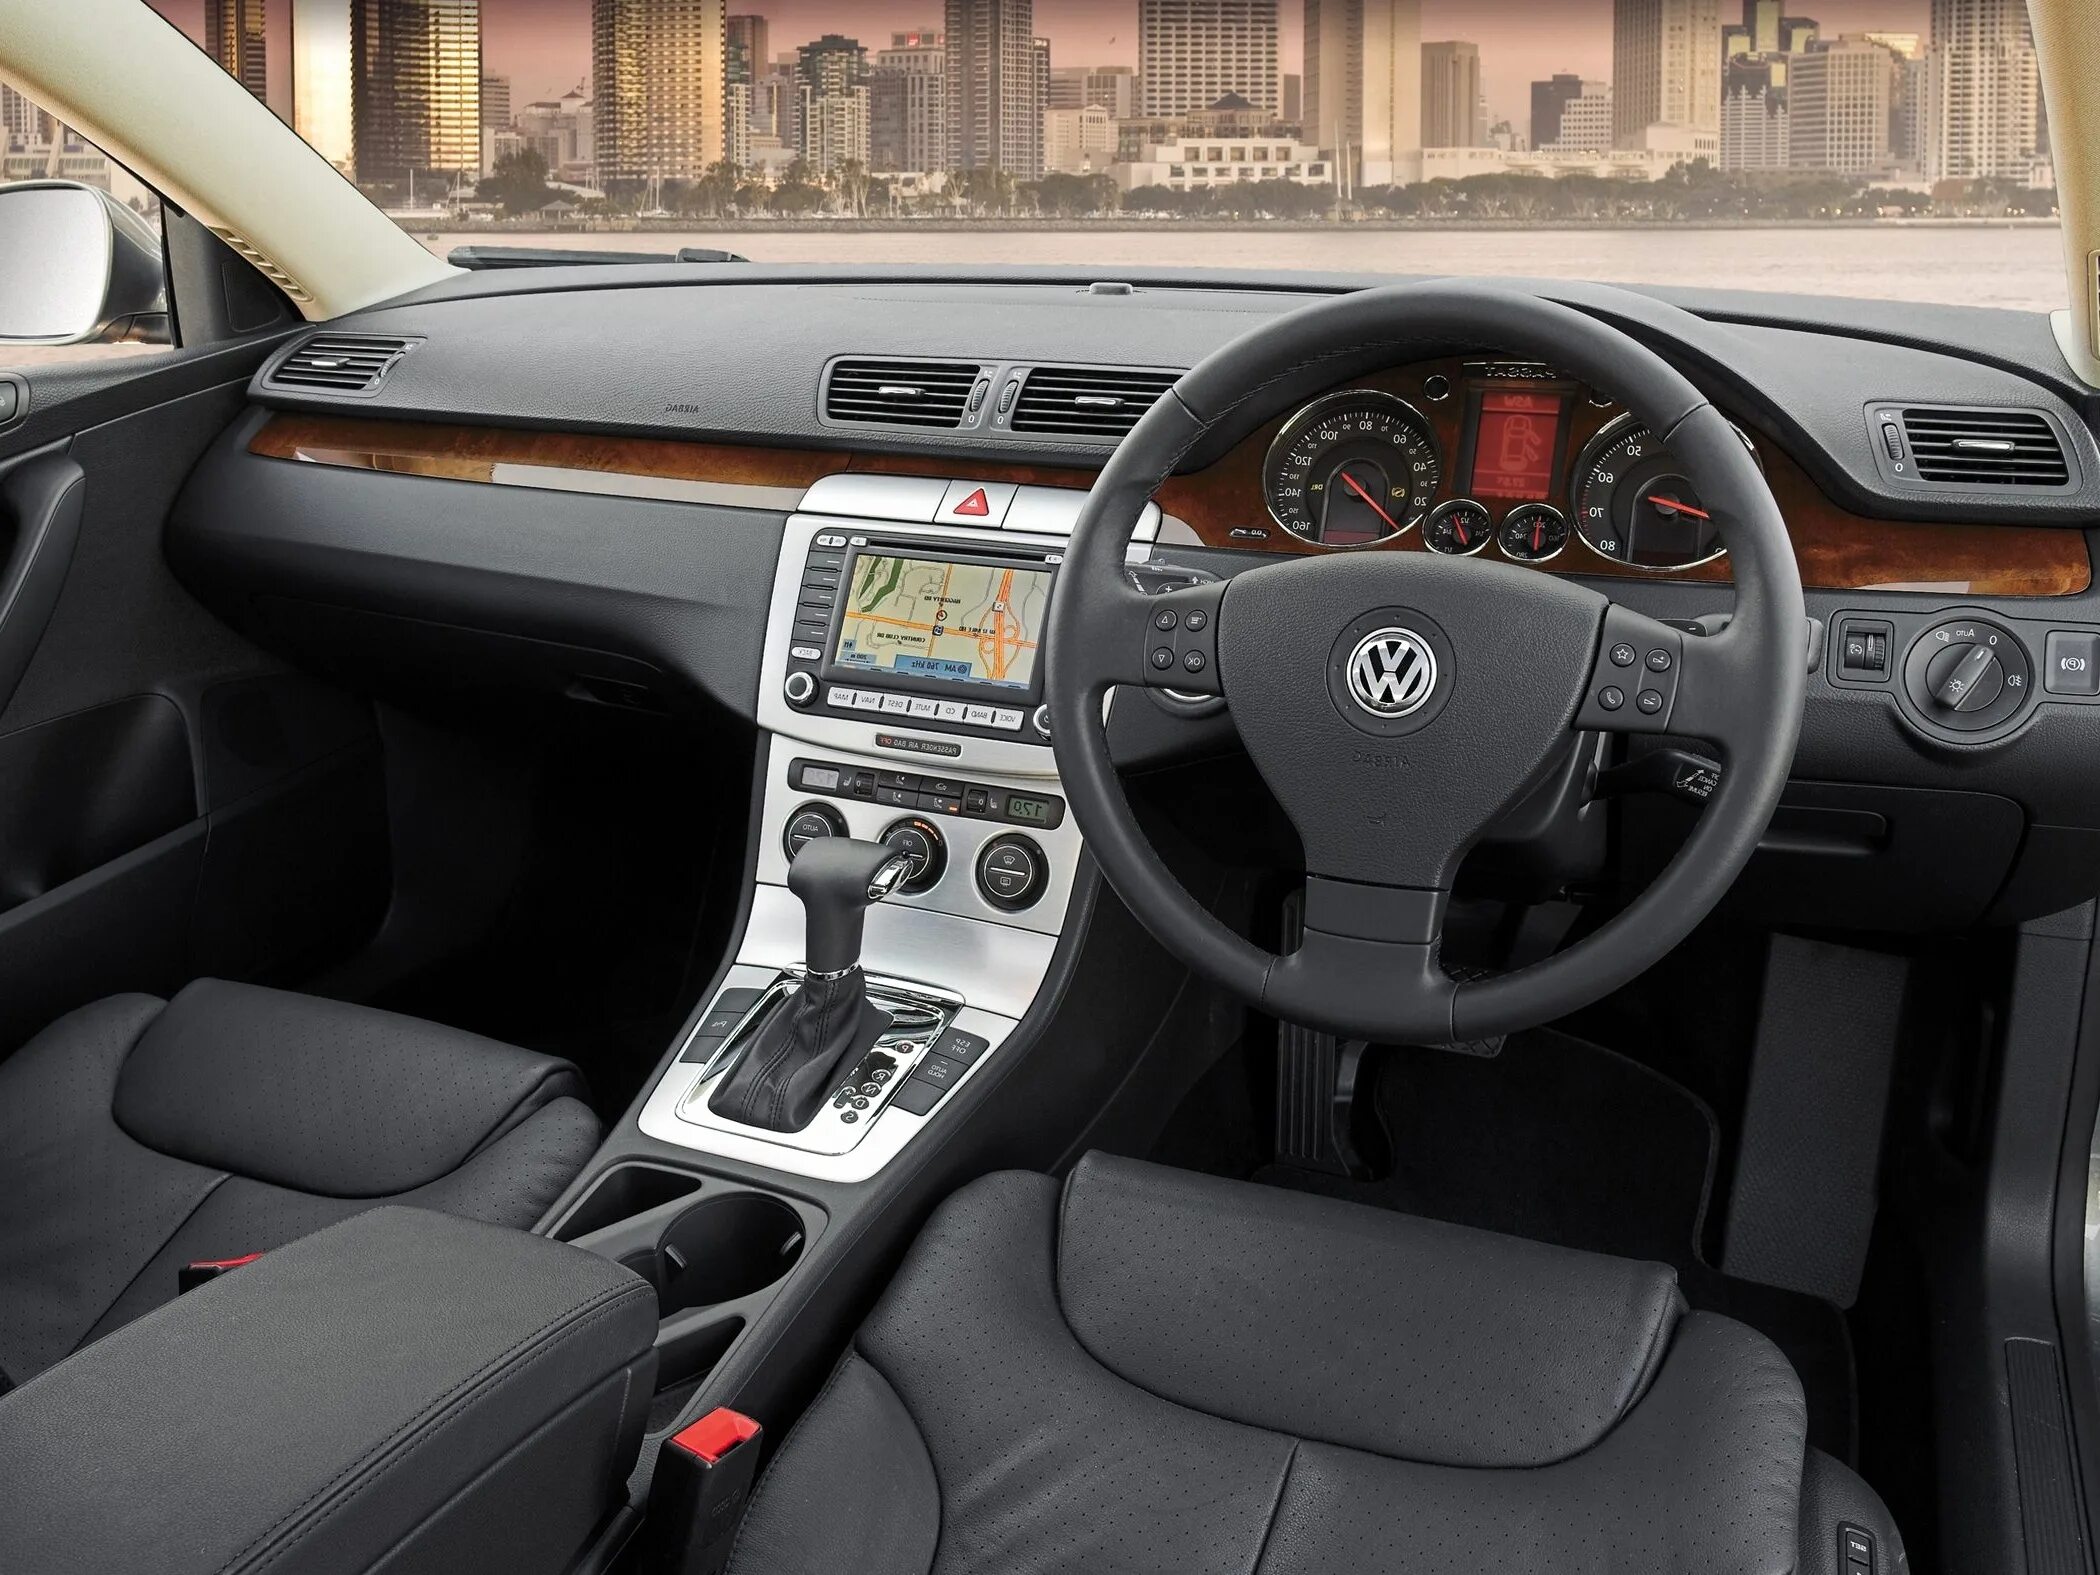 VW Passat b6 салон. Волцваген пассатb6 салон. Volkswagen Passat b6 Interior. Фольксваген Пассат б6 седан салон.